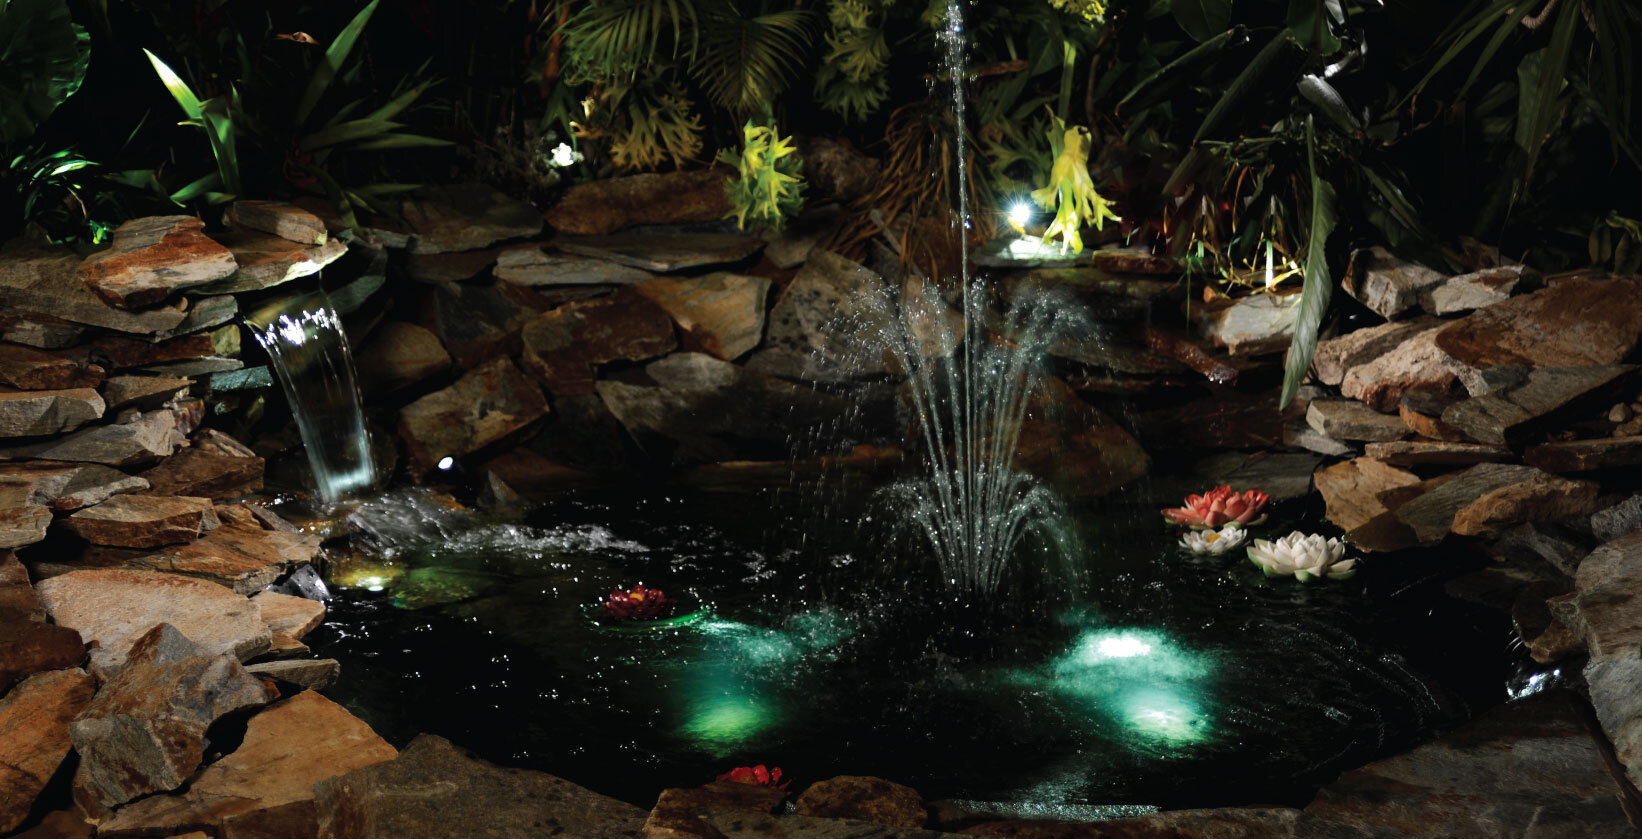 3 Underwater garden Pond Fountain spot Lights koi pond With sensor ! 